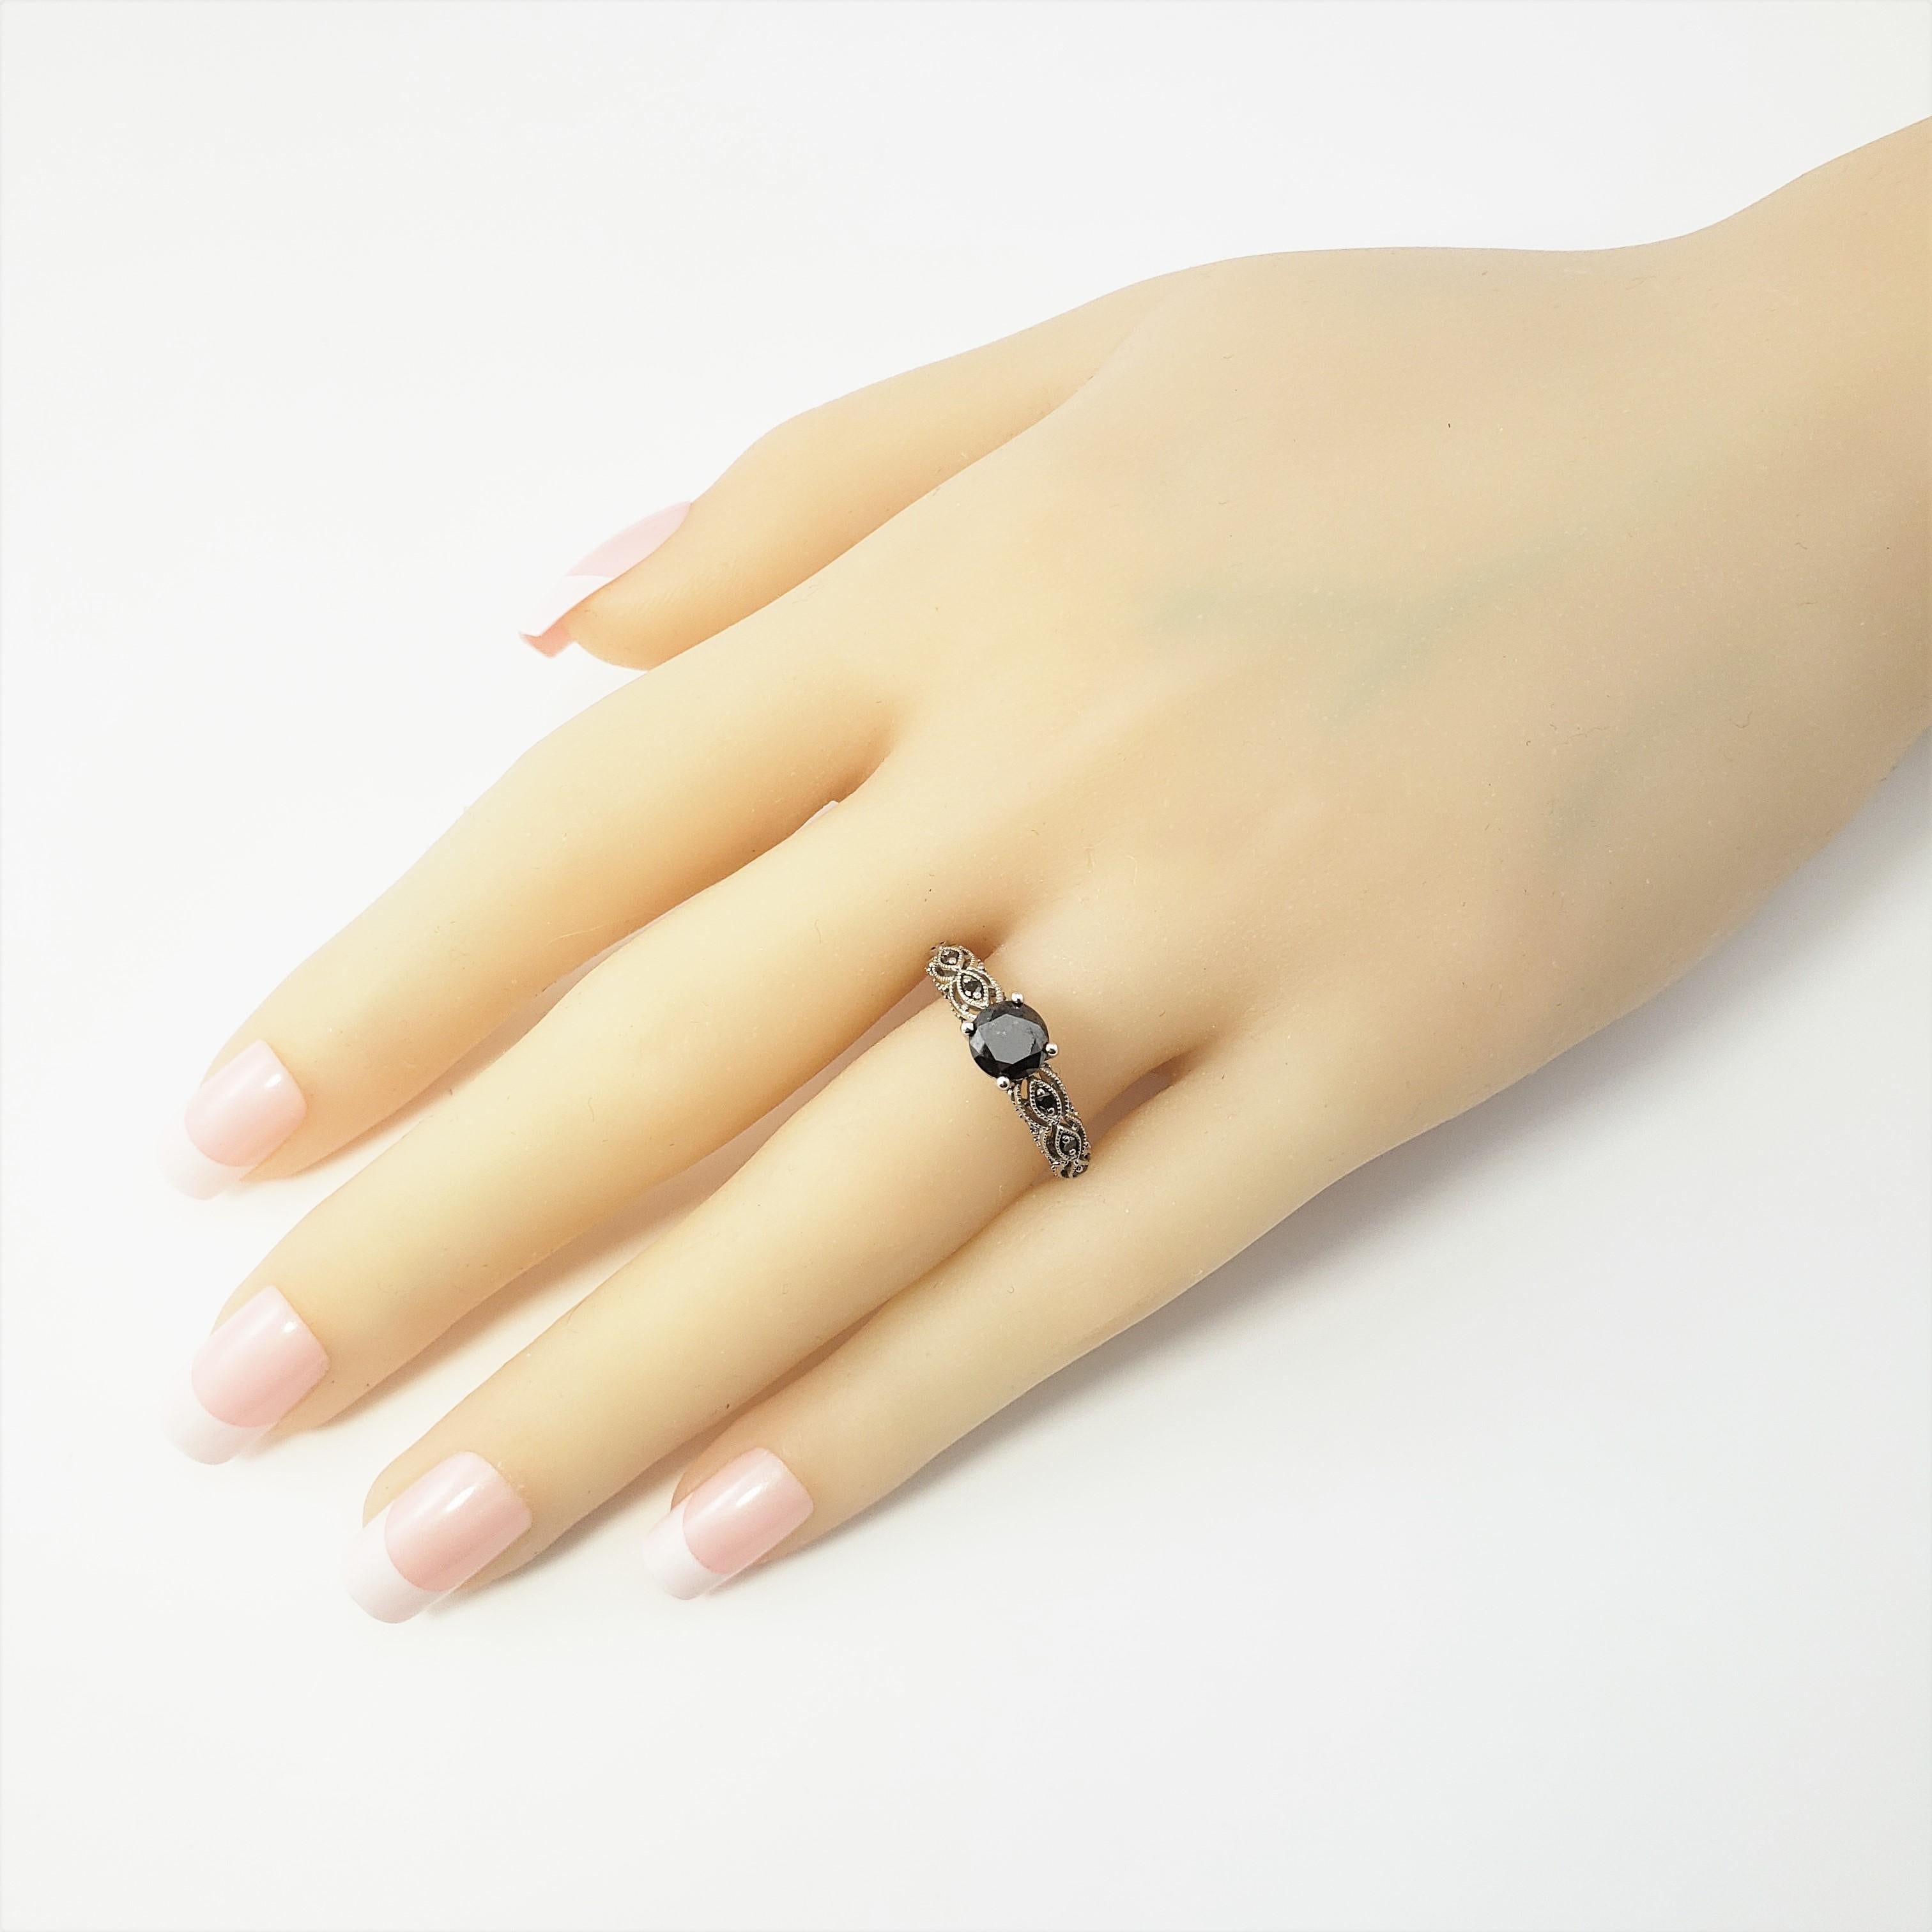 10 Karat White Gold Black Diamond Ring  For Sale 4